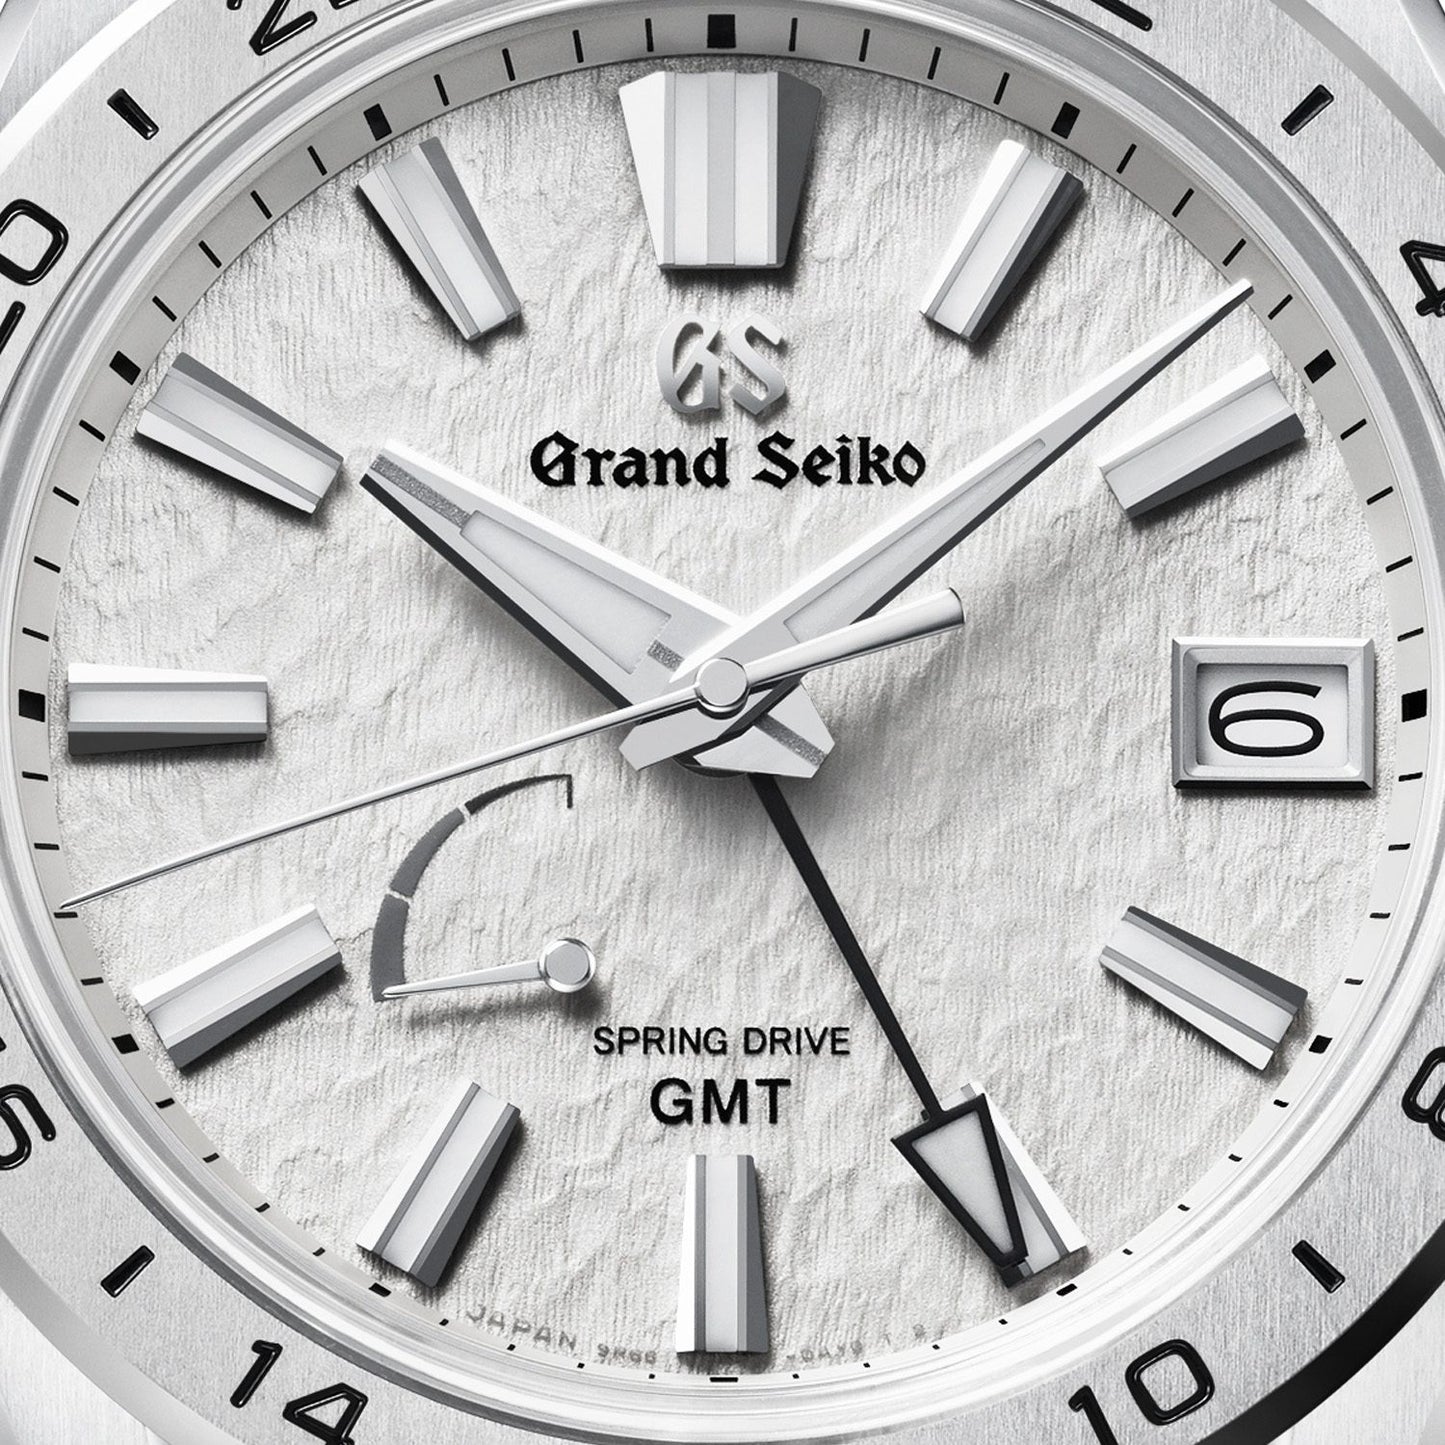 Grand Seiko Evolution 9 ‘Mistflake’ Spring Drive GMT Watch